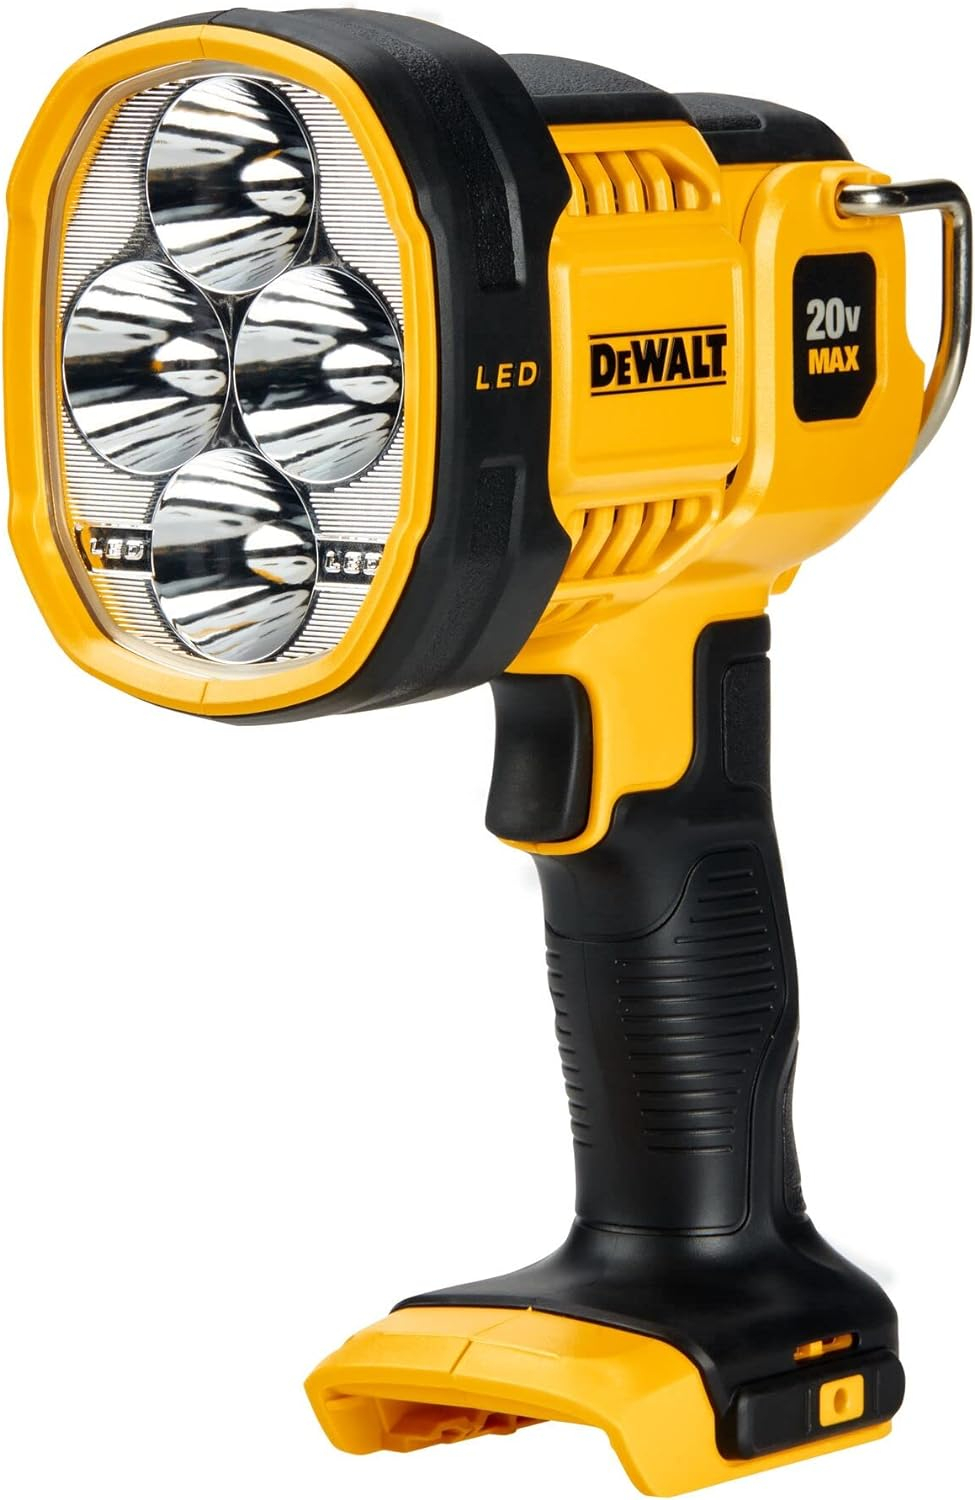 DEWALT 20V MAX LED Work Light, 508 Yard Distance, 90 Degree Pivoting Head,  1500 Lumens of Brightness, Cordless (DCL043), Yellow Spotlight Lazada